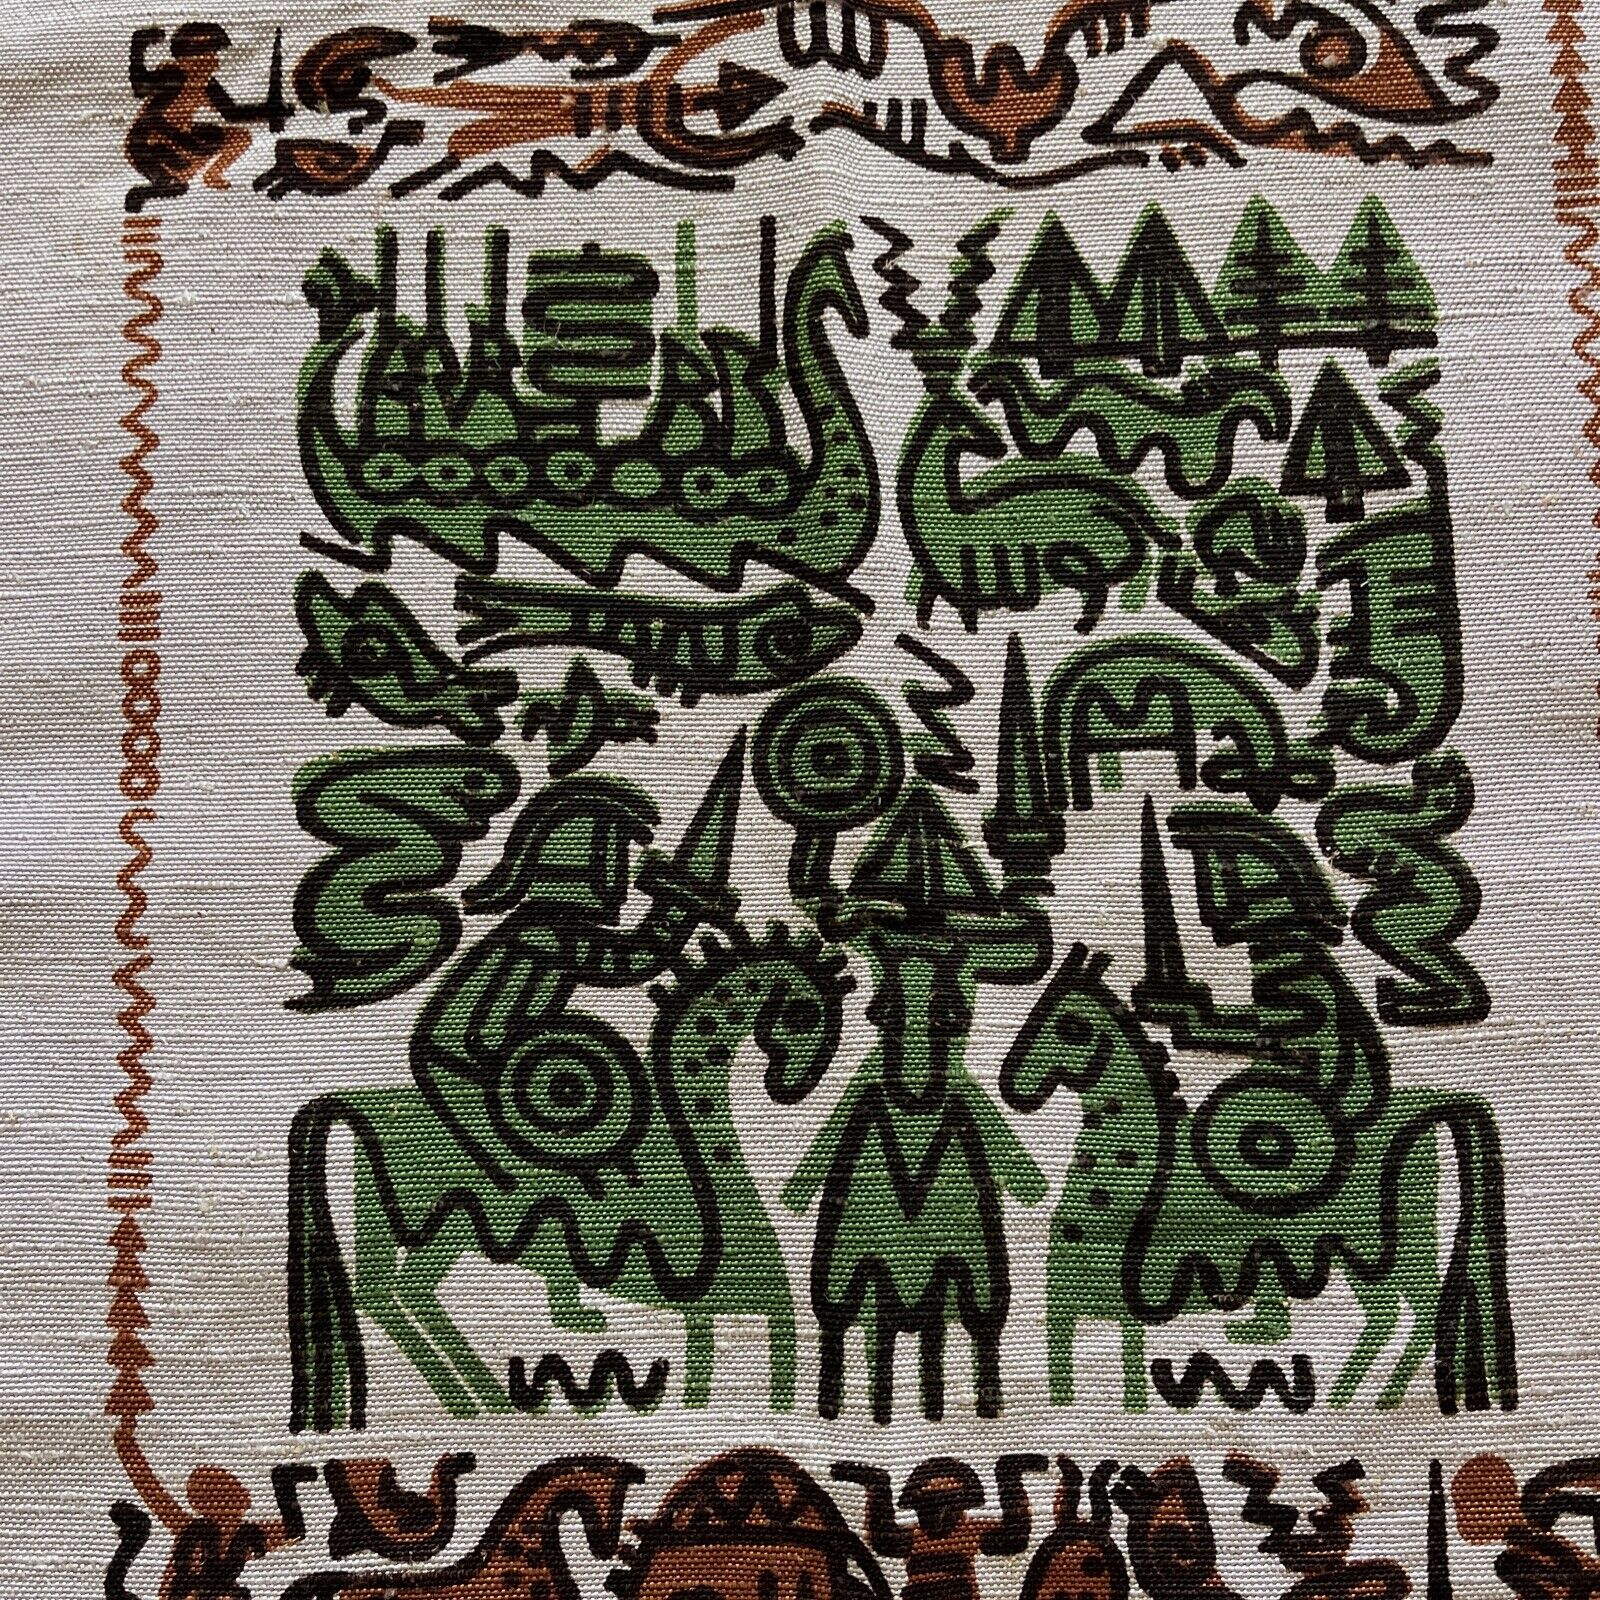 RARE Vintage Norse mythology hand printed fabric by Elenhank designers 49” X 54”